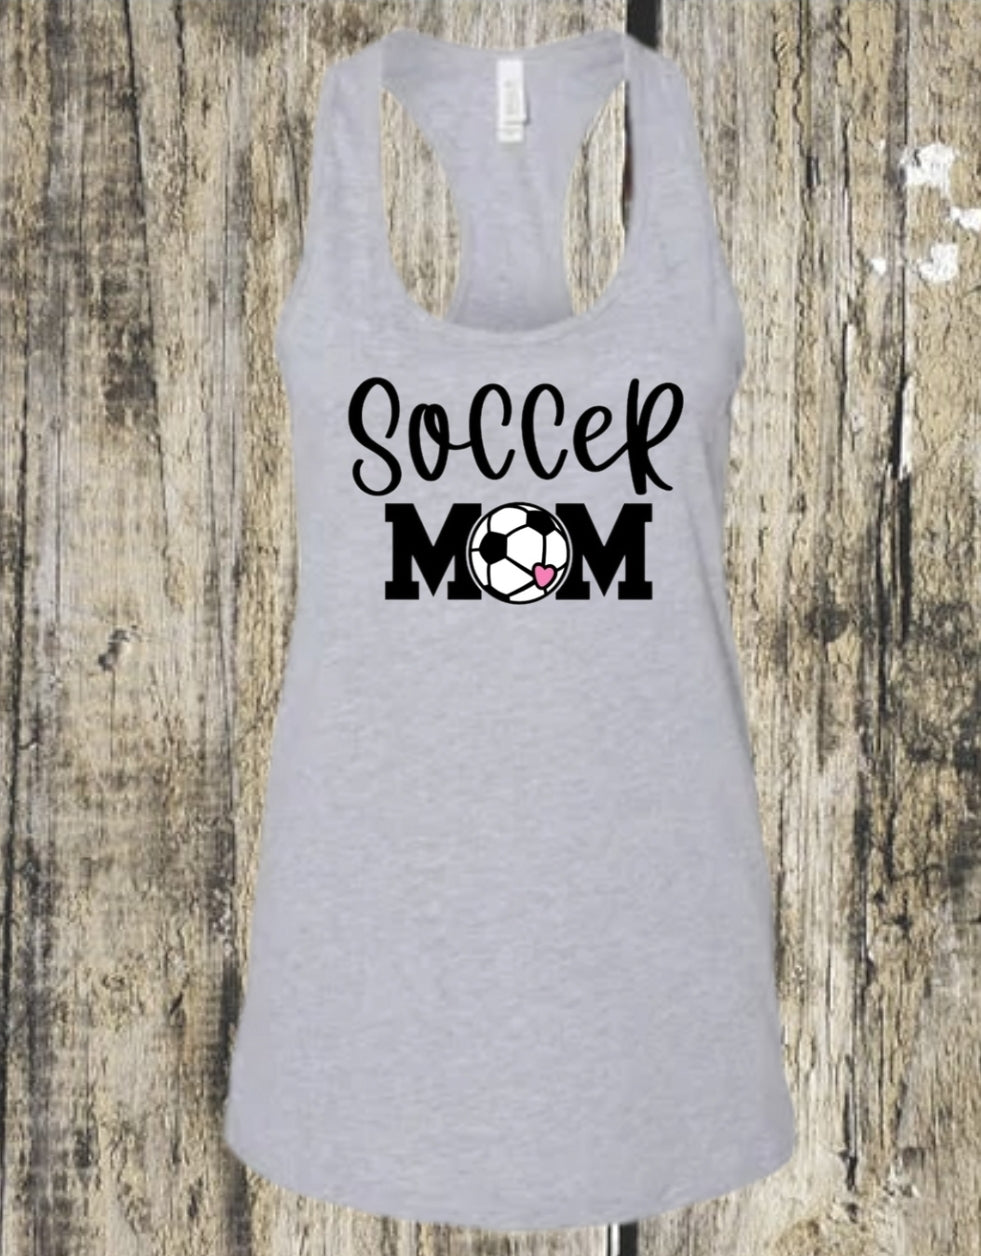 Soccer Mom (#1)